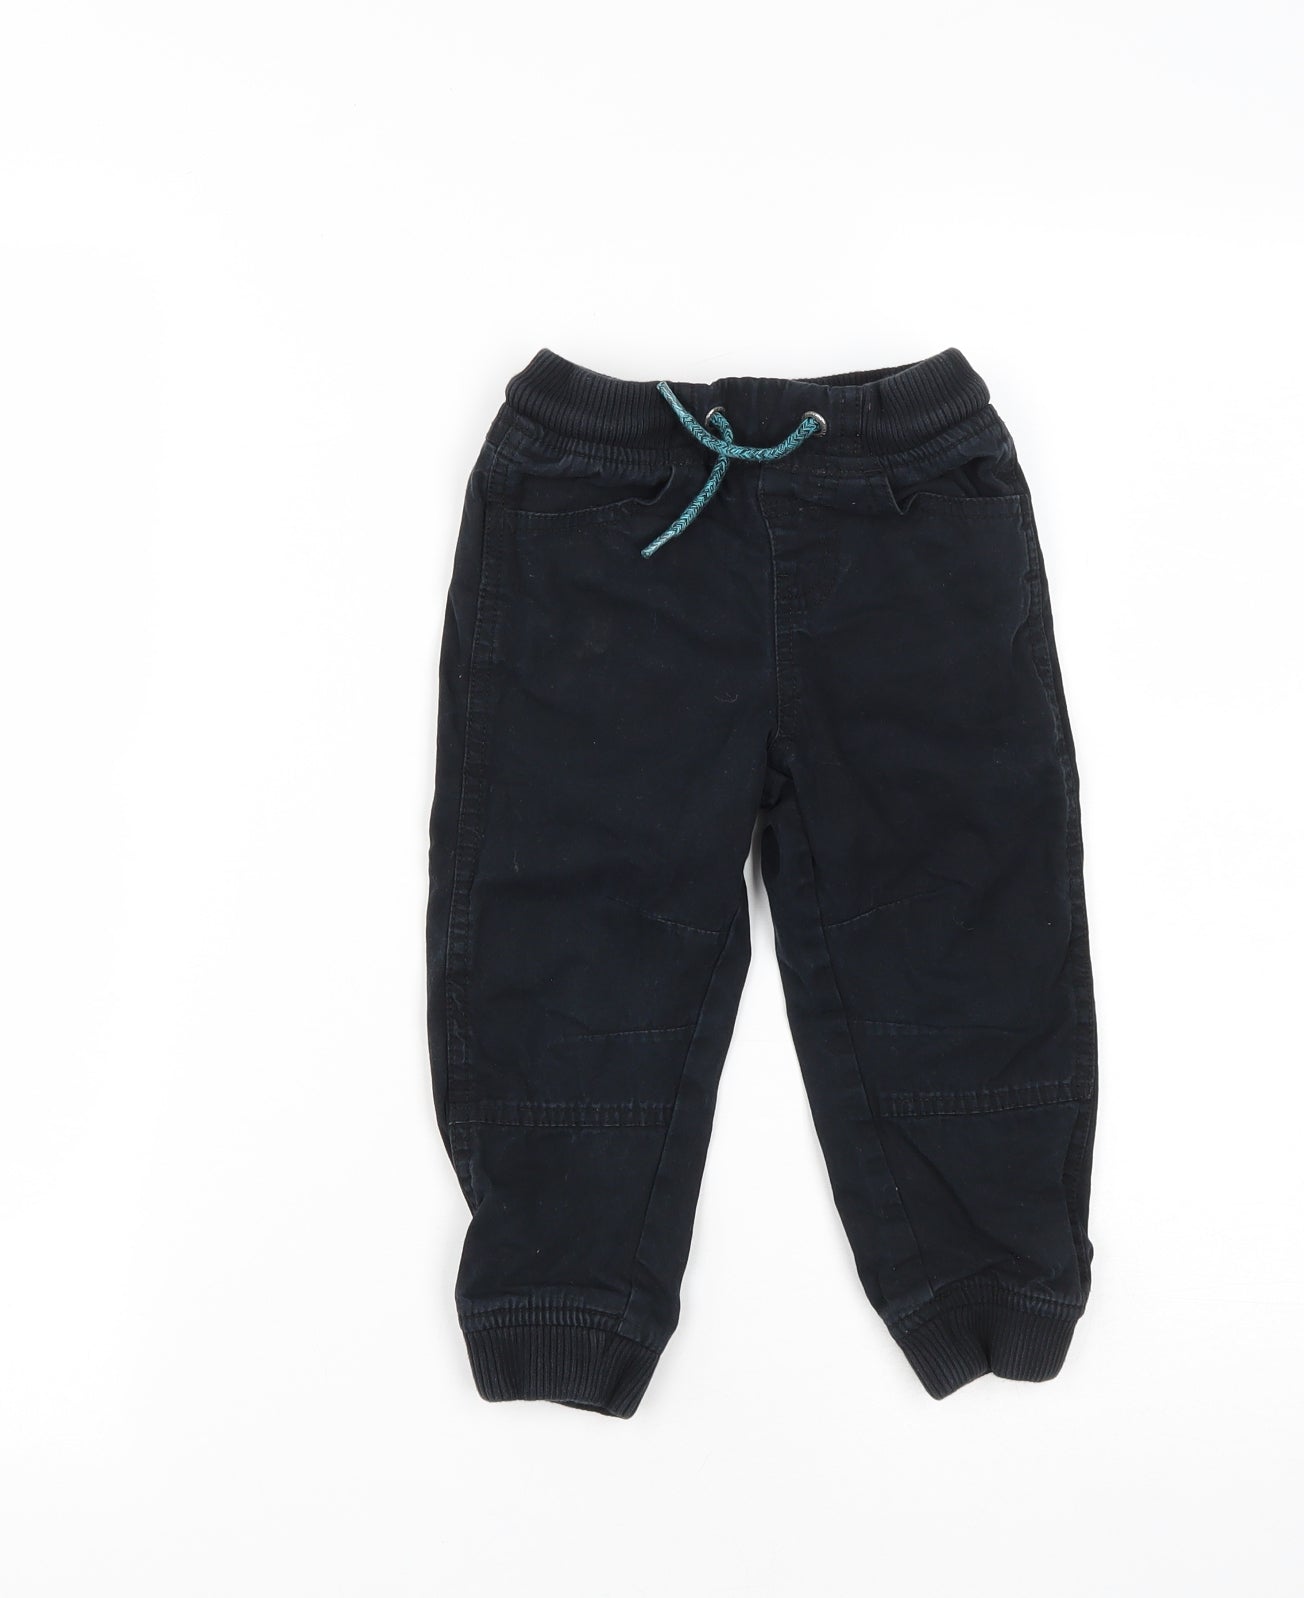 Drawst Years Trousers Lupilu – Jogger Cotton Ltd Black Size Regular 2-3 Boys Preworn